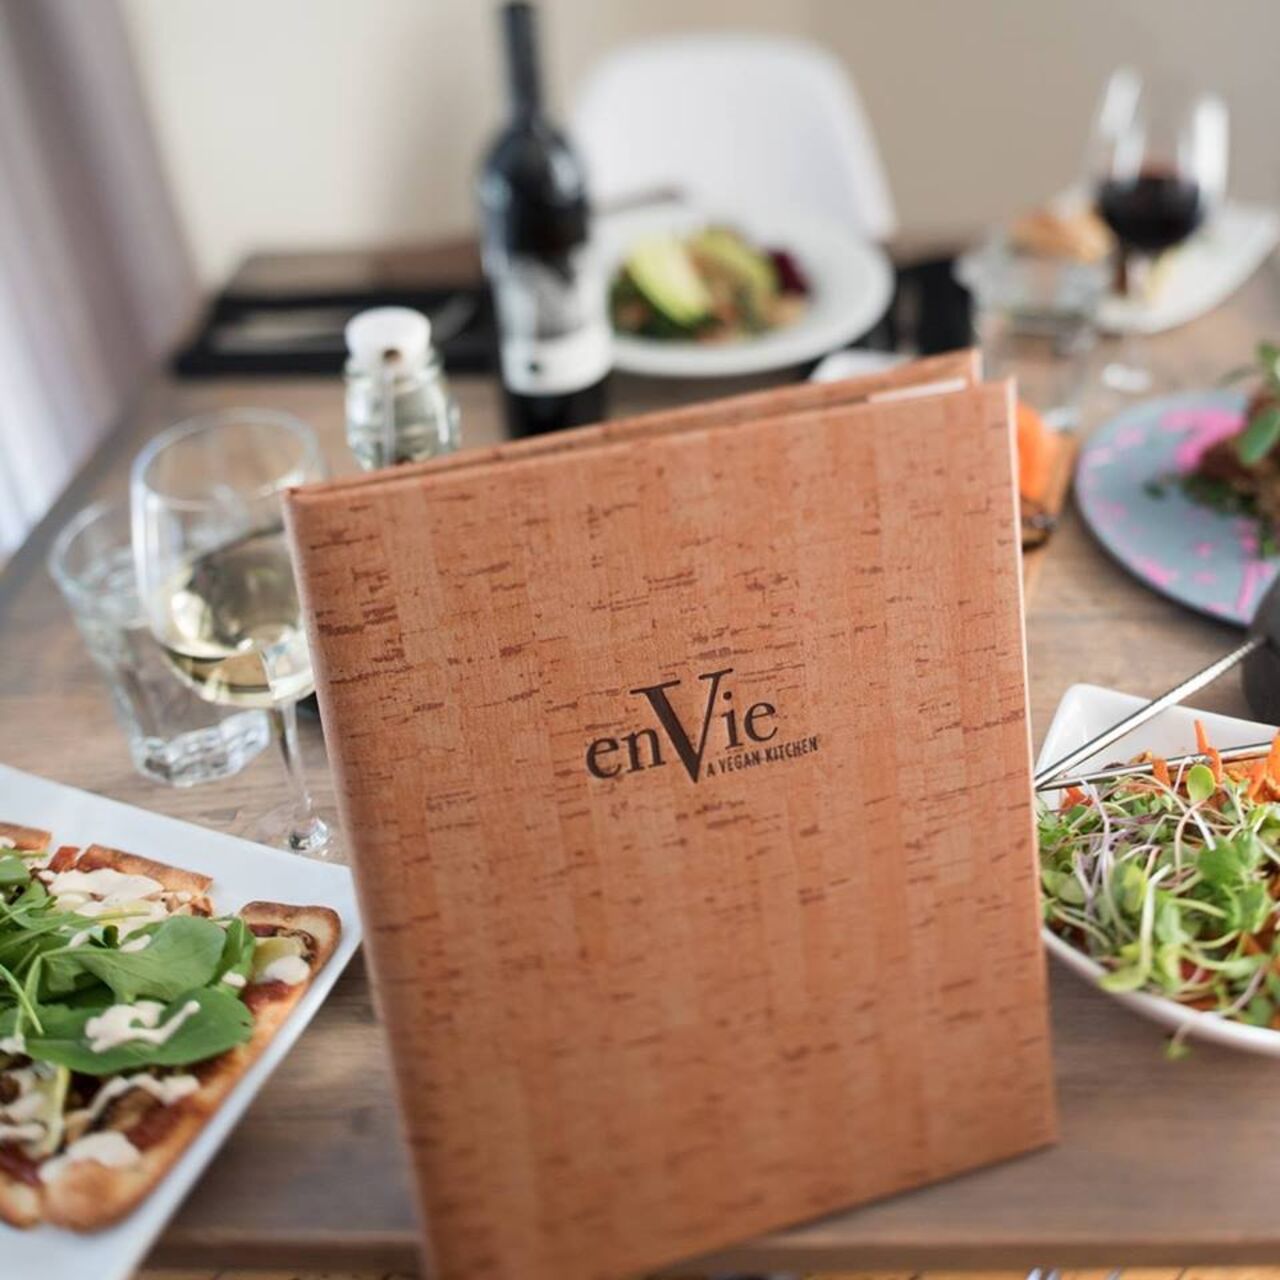 A photo of enVie - A Vegan Kitchen